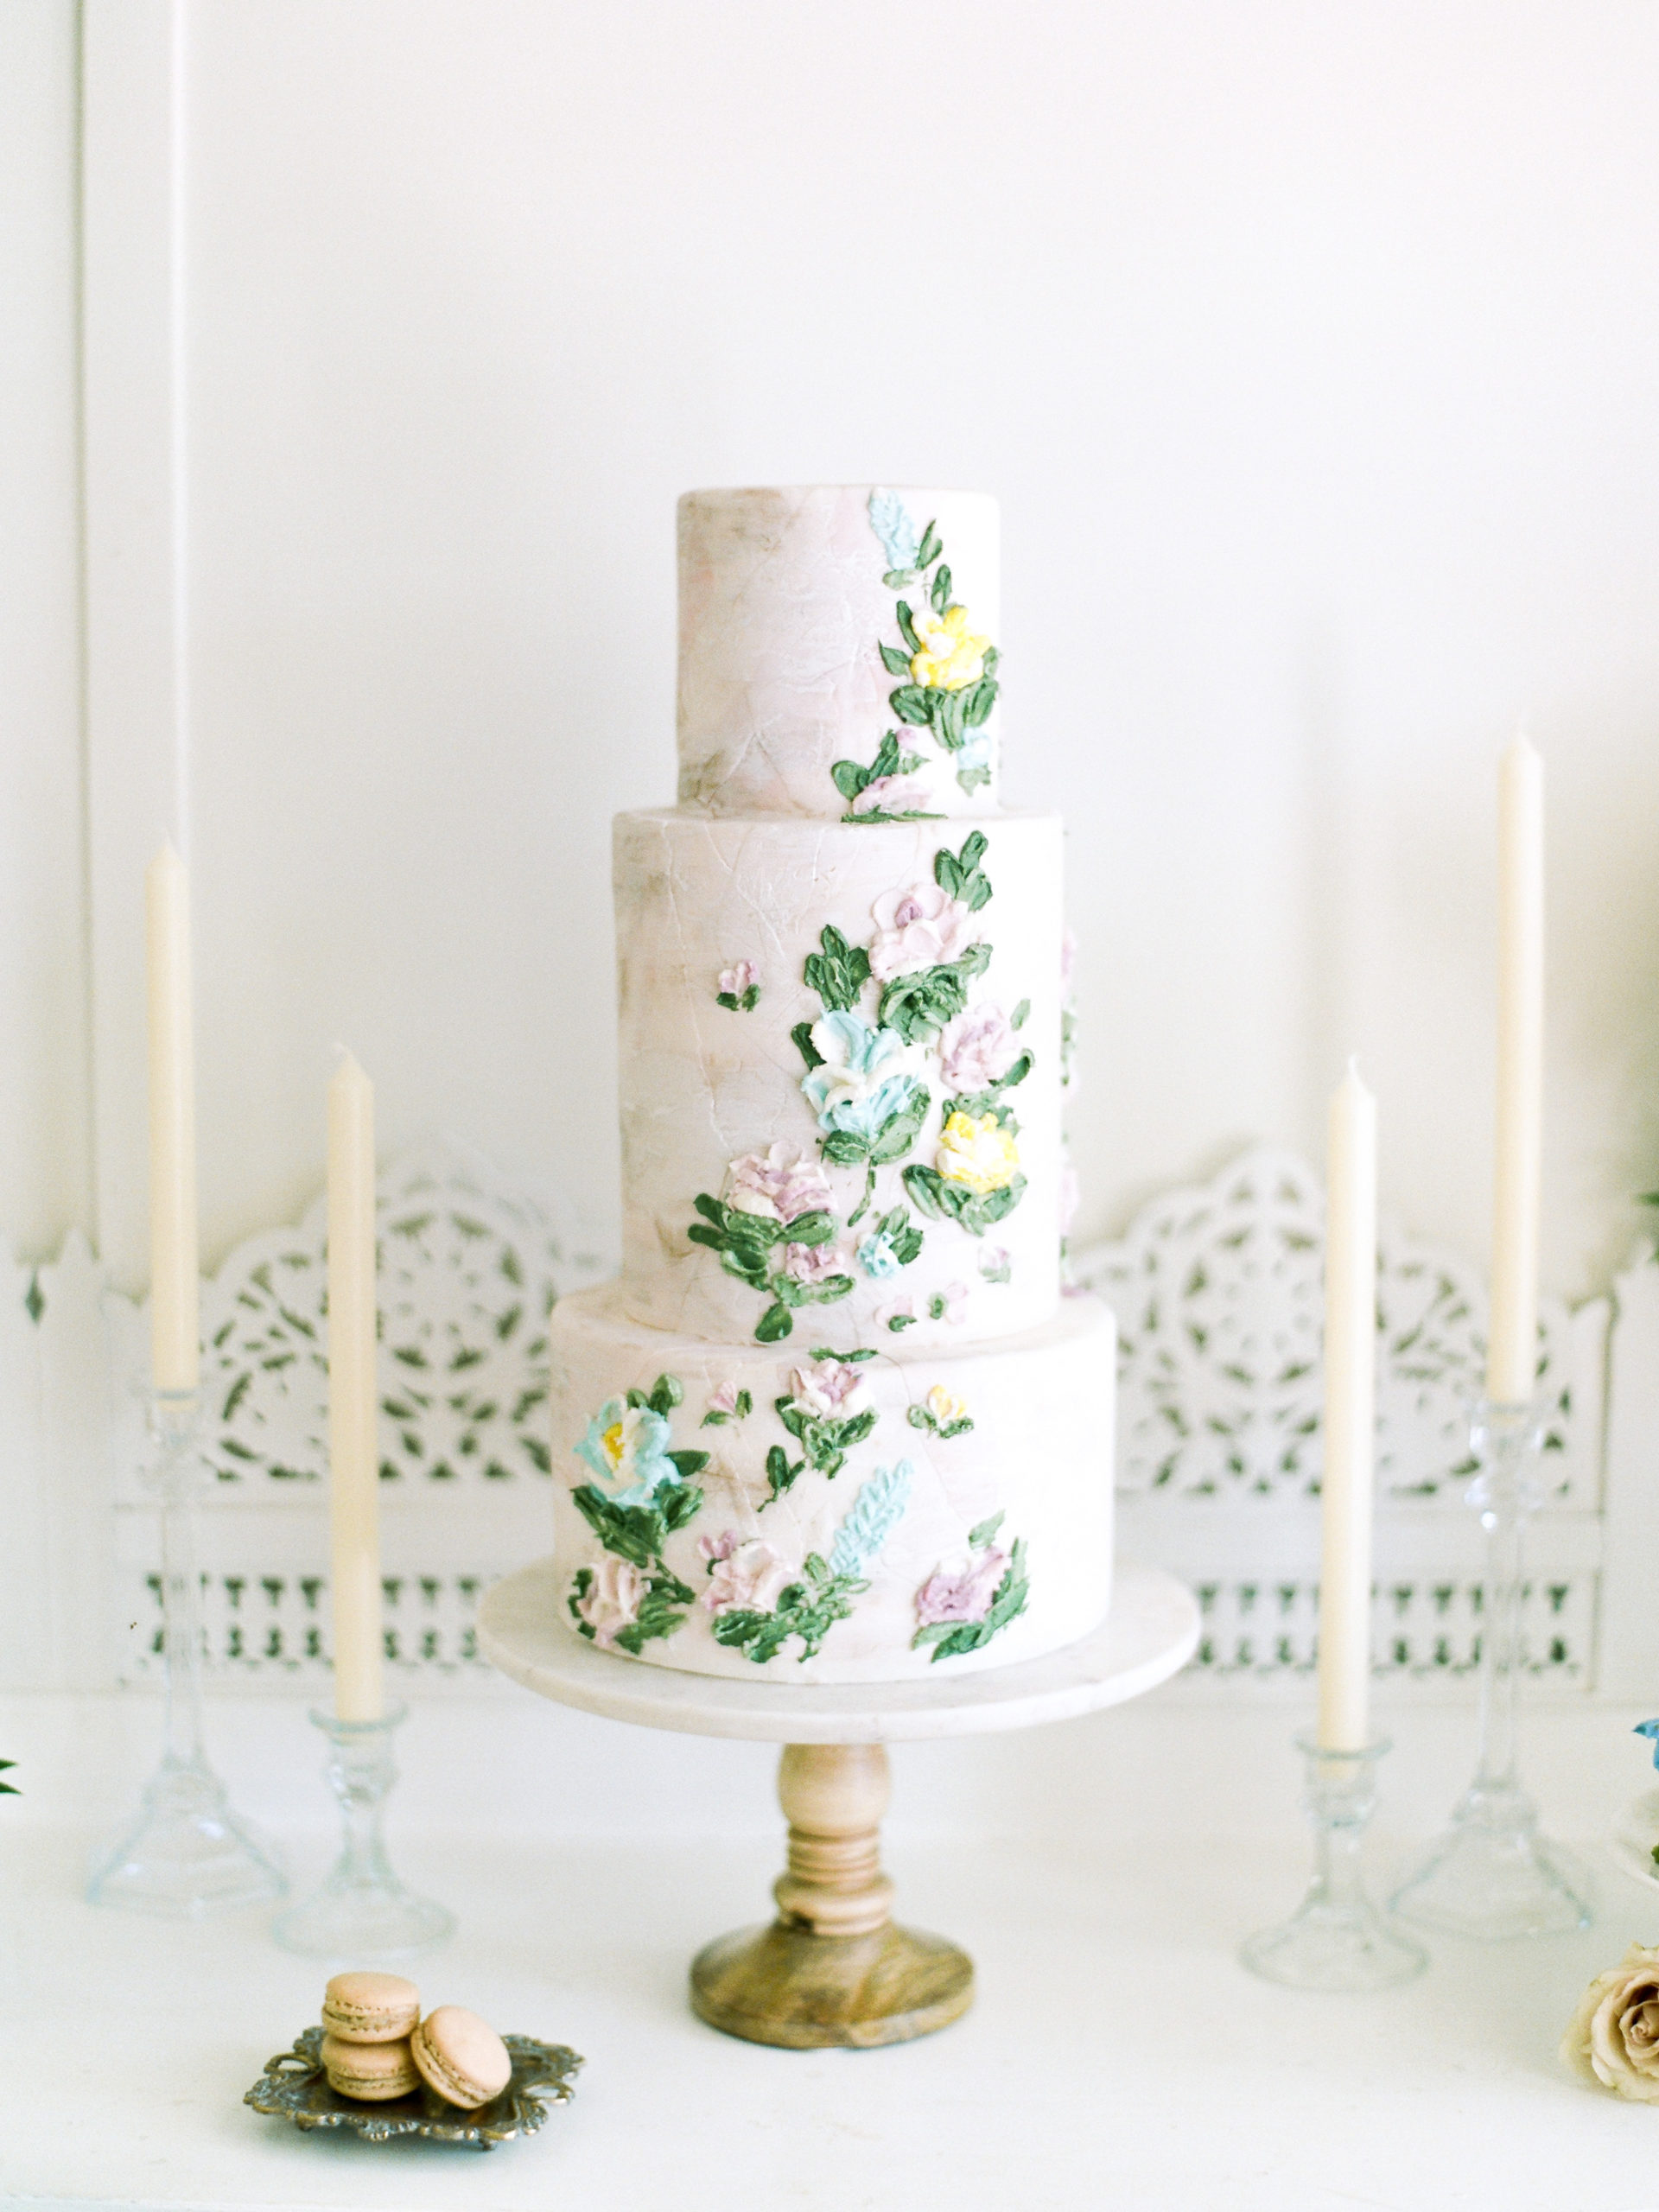 Three tiered wedding cake with greenery and white